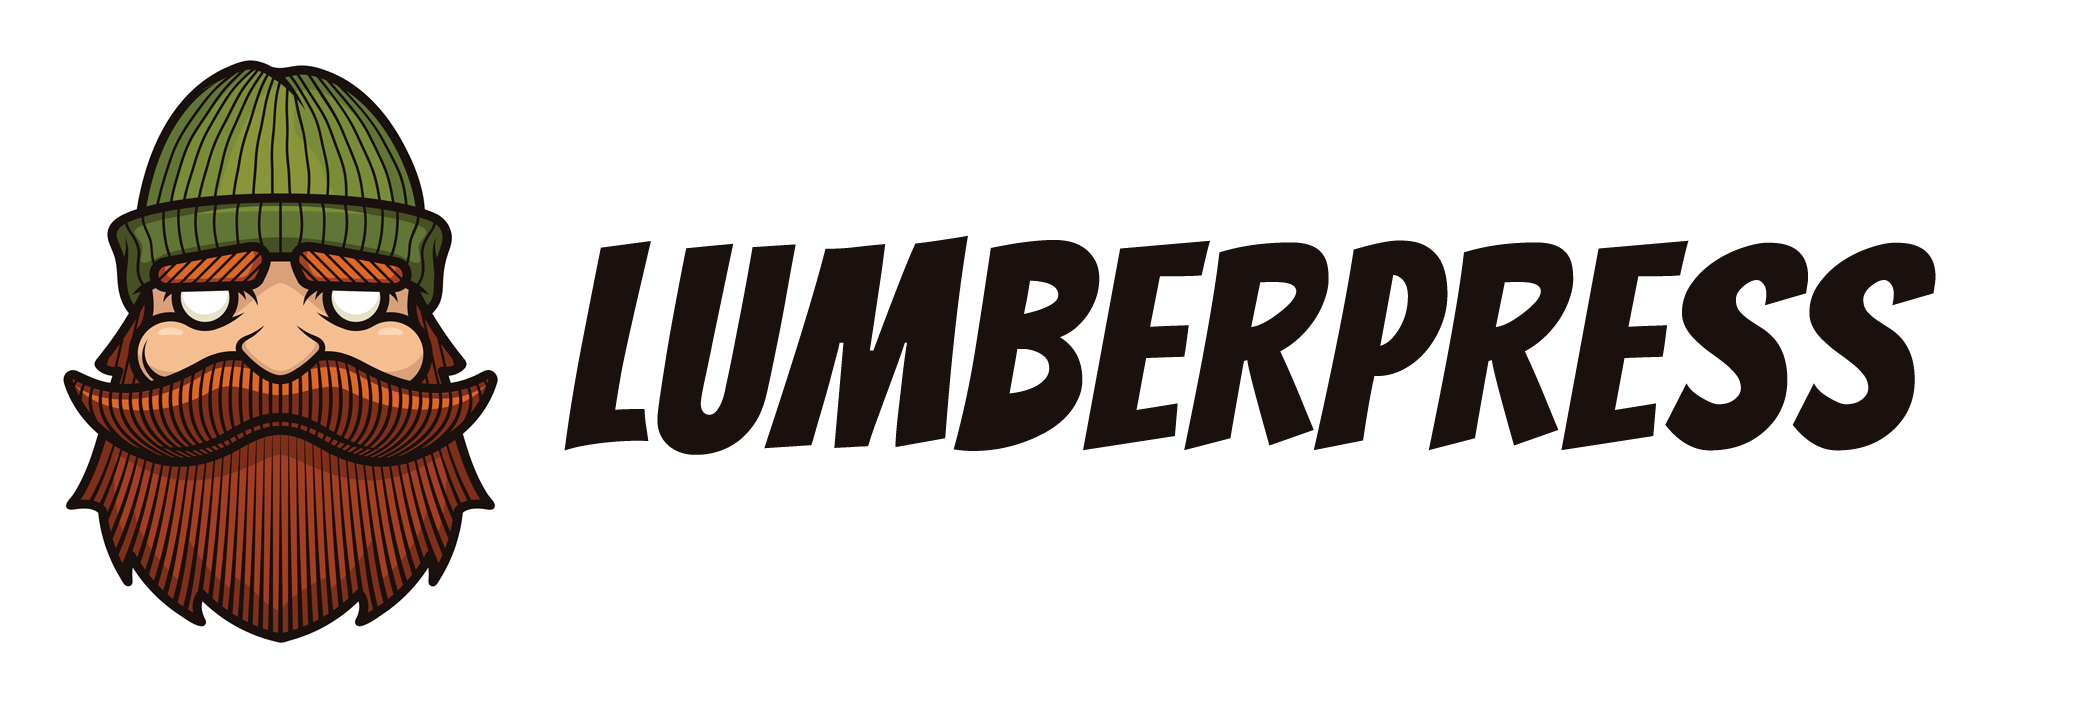 Web design by Lumber Press